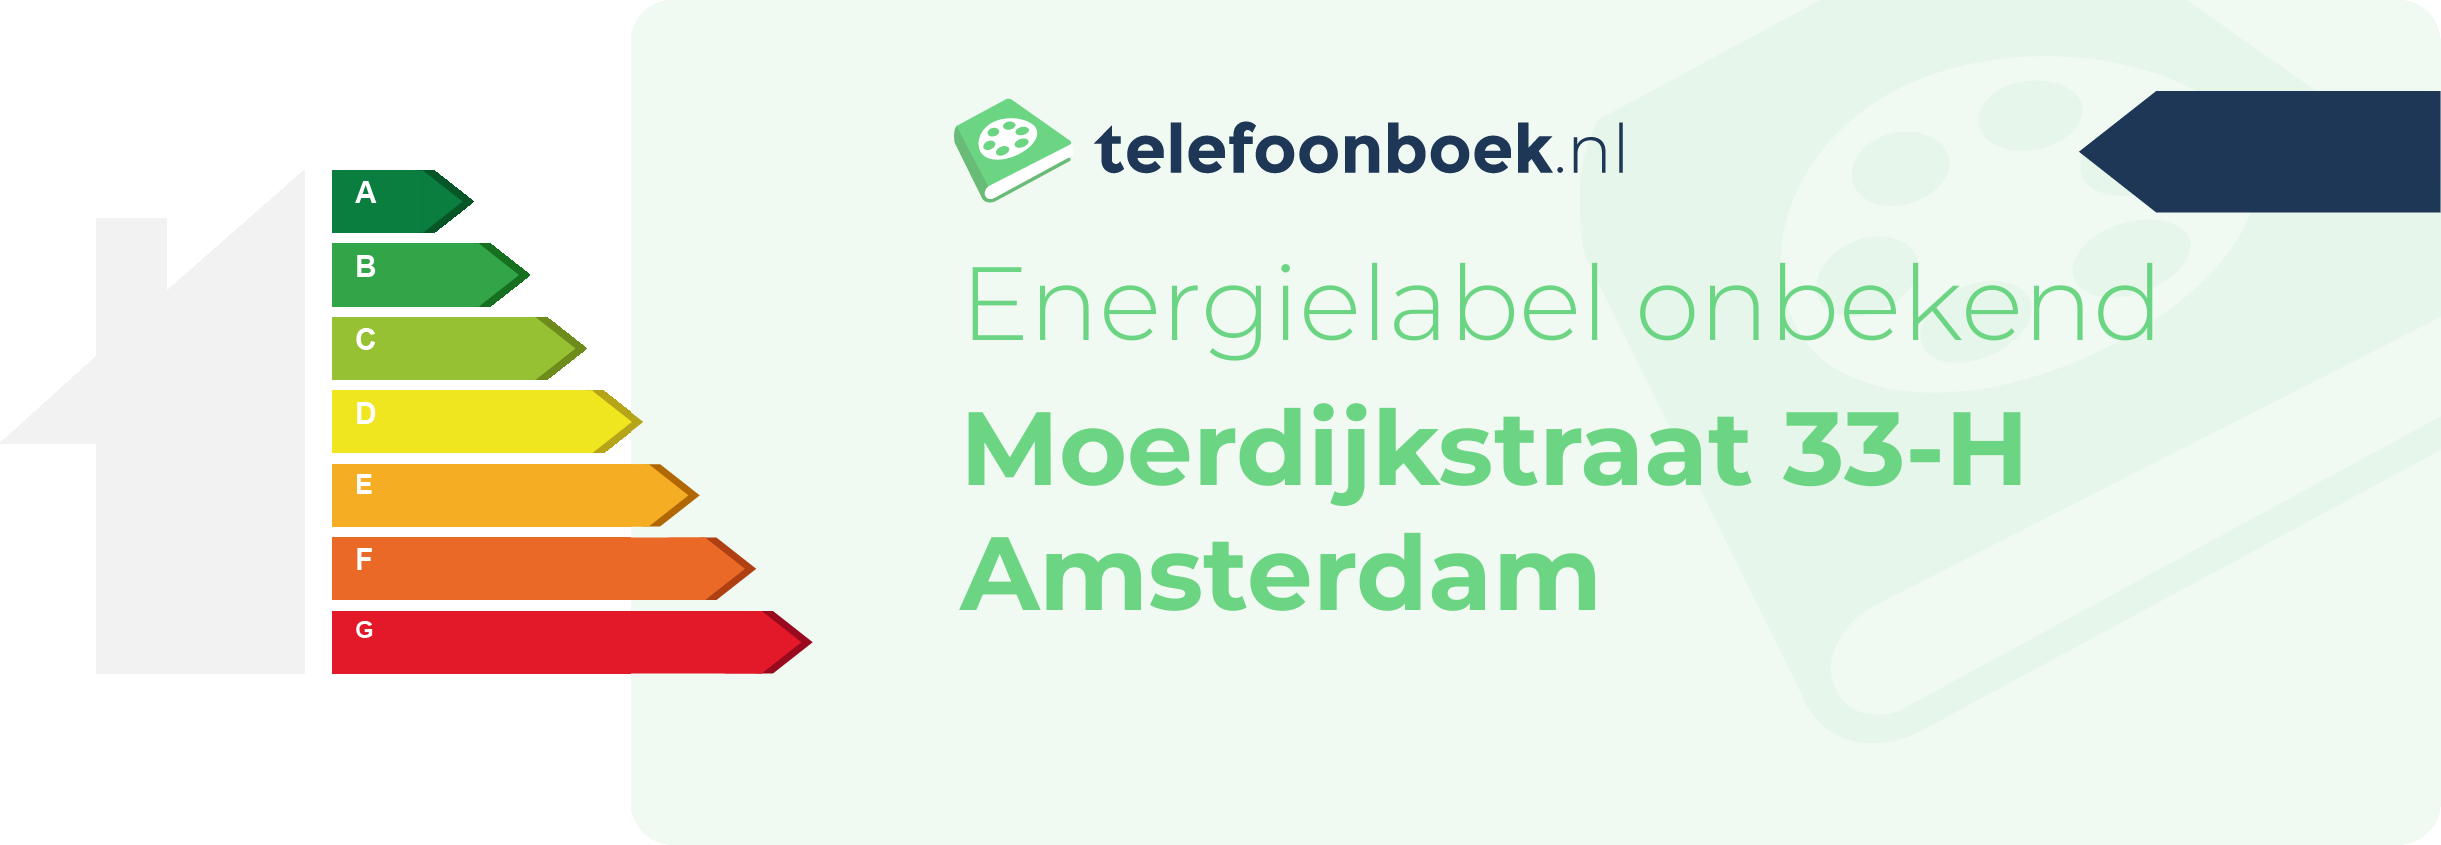 Energielabel Moerdijkstraat 33-H Amsterdam